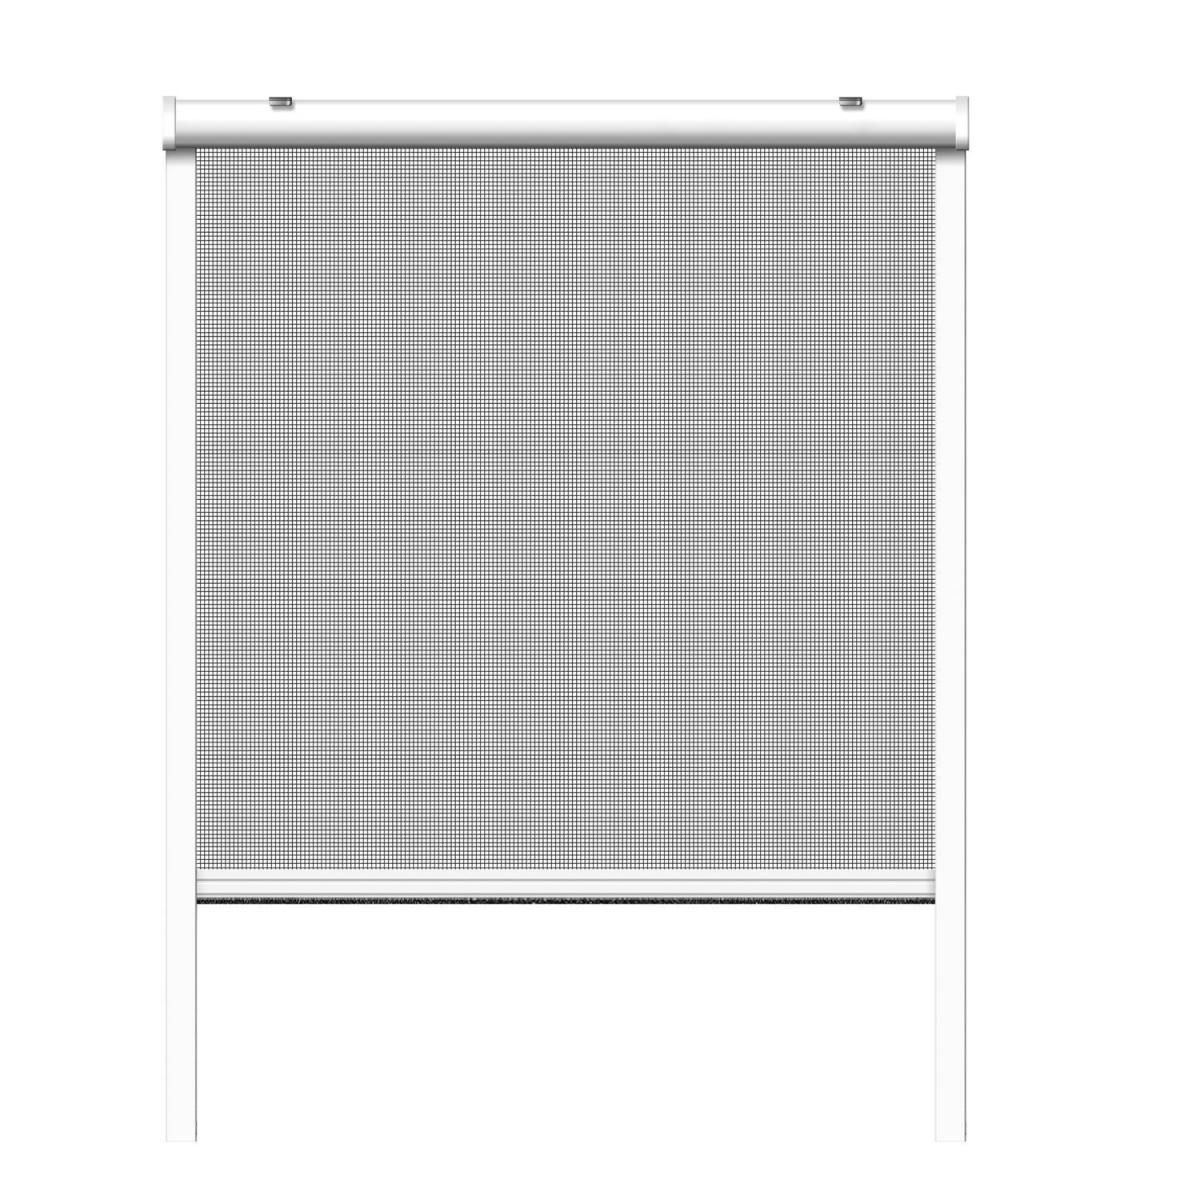 OBI Alu Rollo-Fenster-System 130 cm x 160 cm Weiß kaufen bei OBI